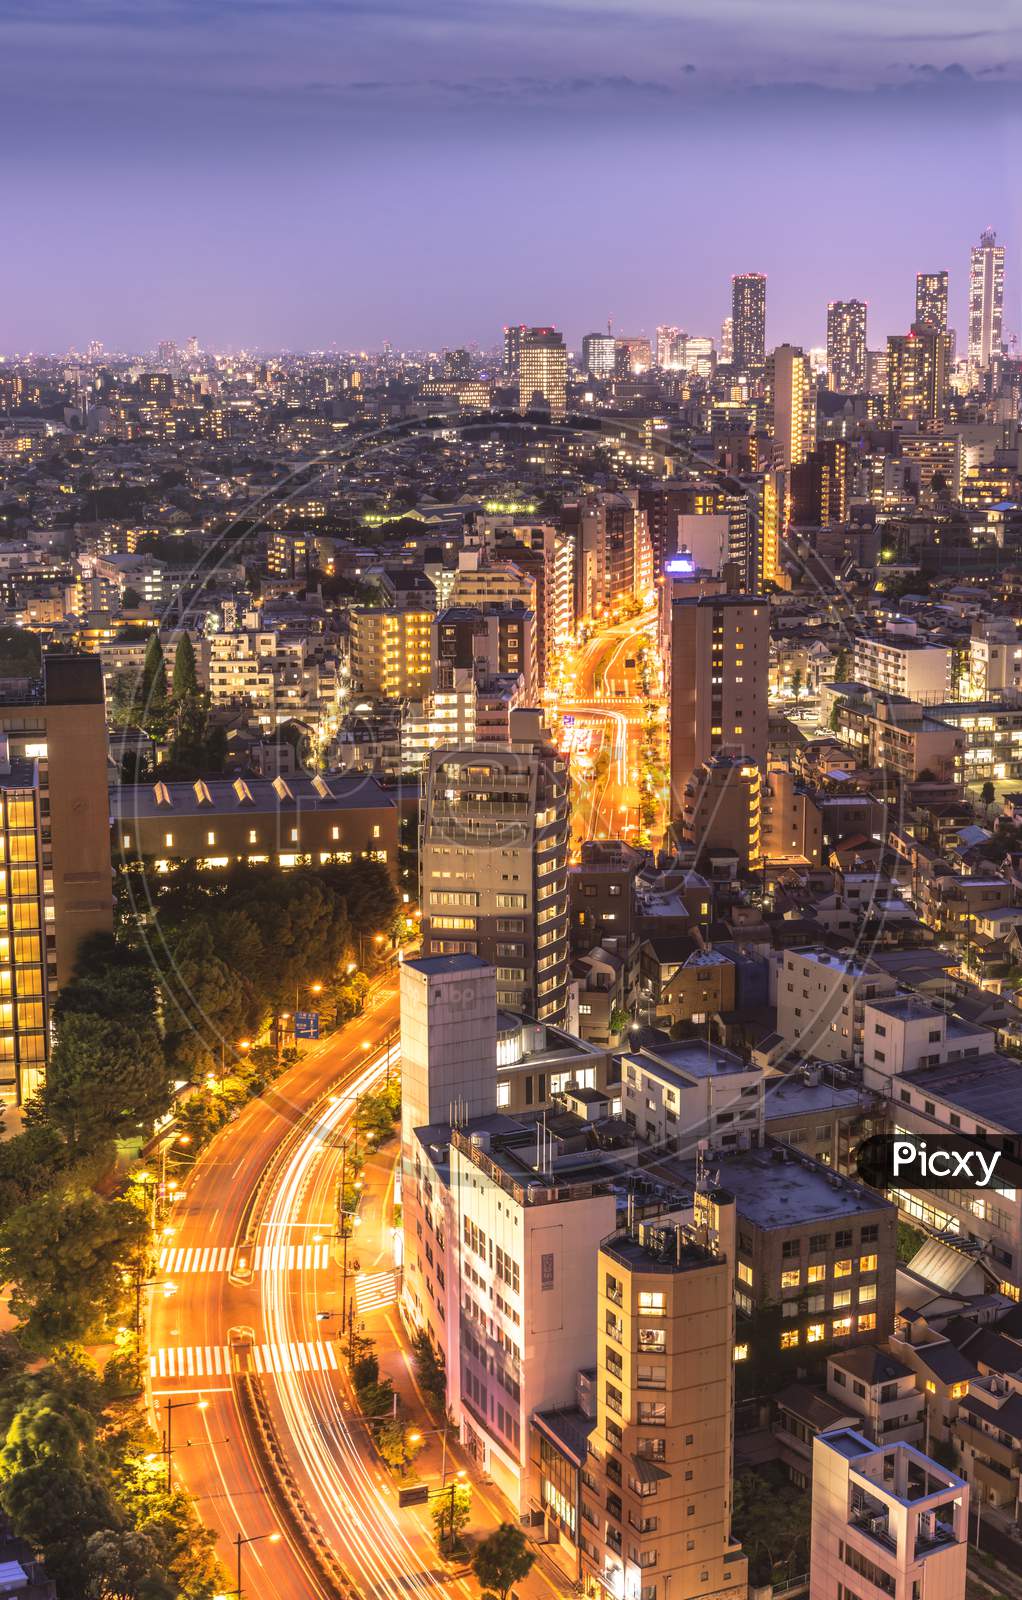 Aerial View Of Korakuen Illuminated Streets In The Night Of Tokyo With Ikebukuro Skyscrapers In Background.